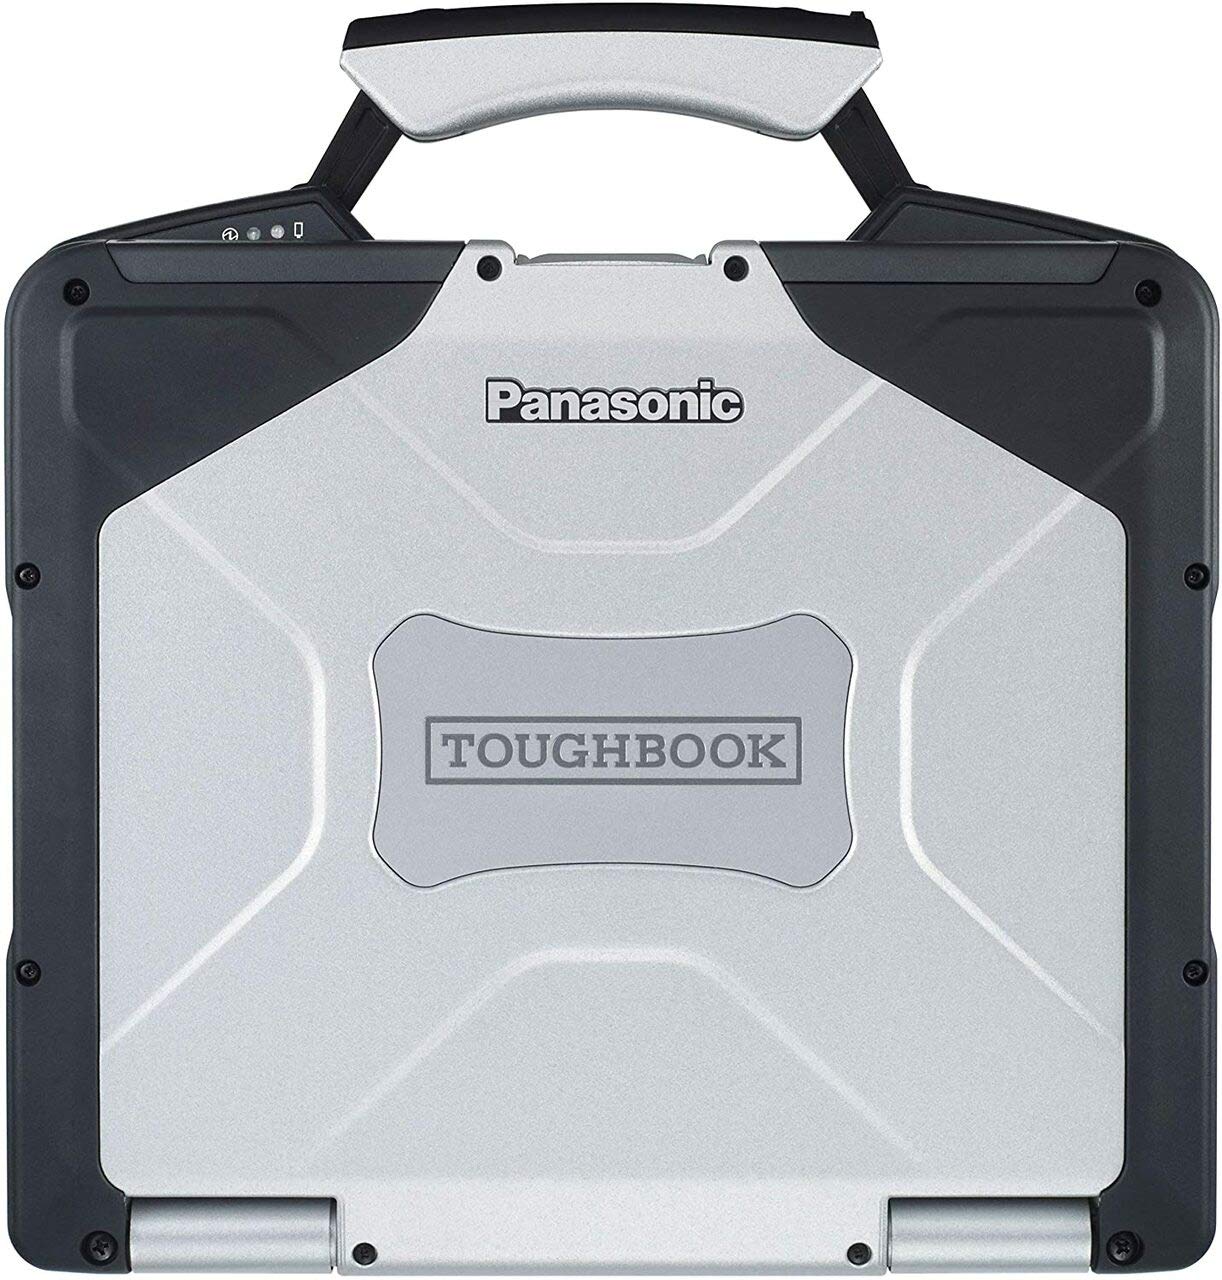 Toughbook PANASONIC CF-31 MK1 i5 2.4GHZ, 320GB Hard Drive, 4GB Ram, Windows 7 Pro